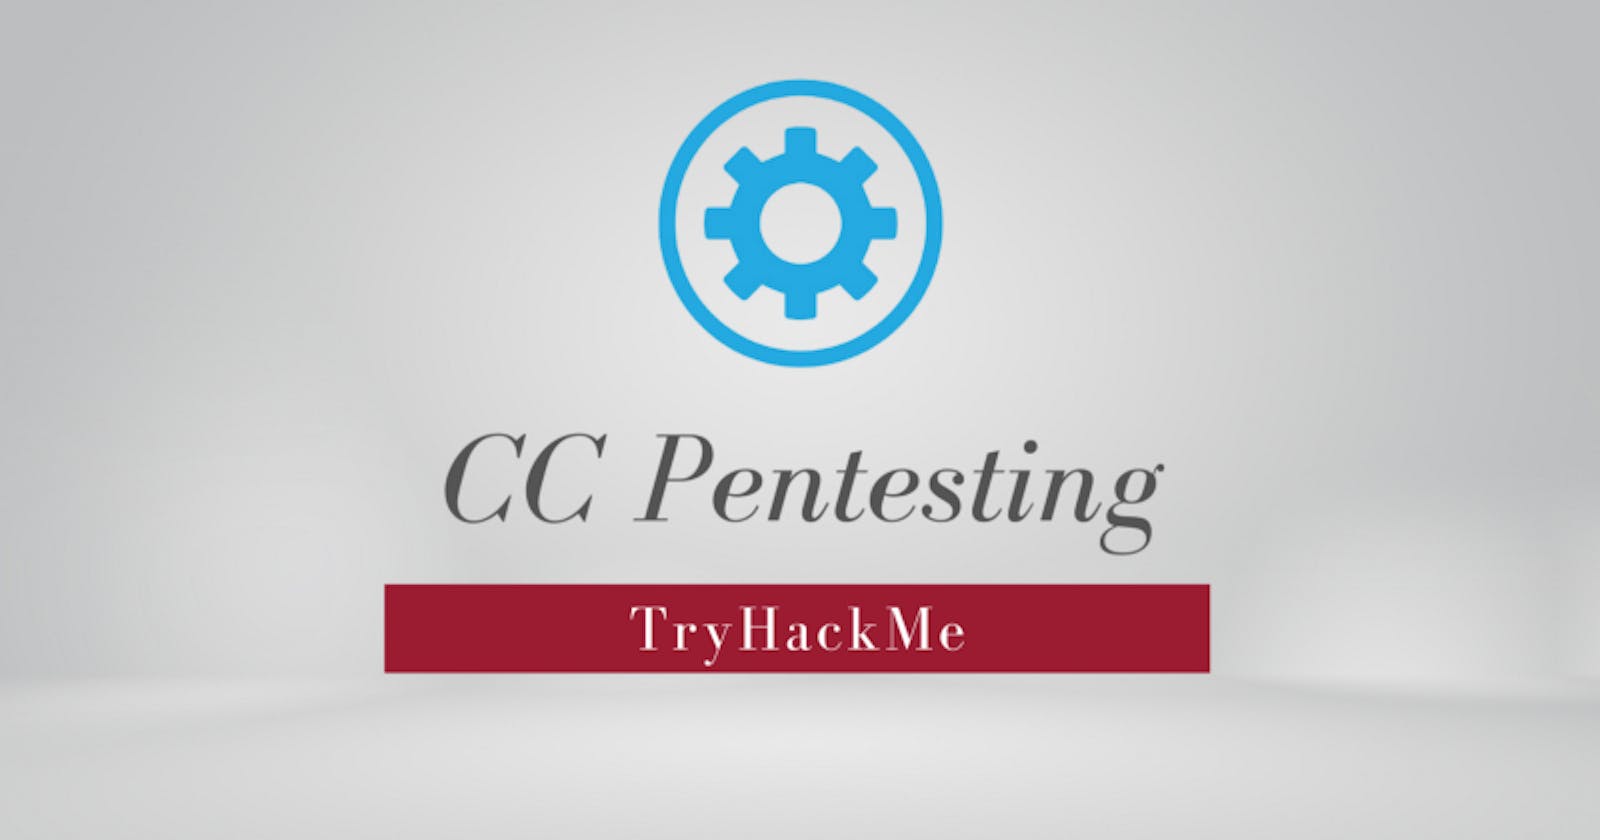 TryHackMe: CC Pentesting | Walkthrough